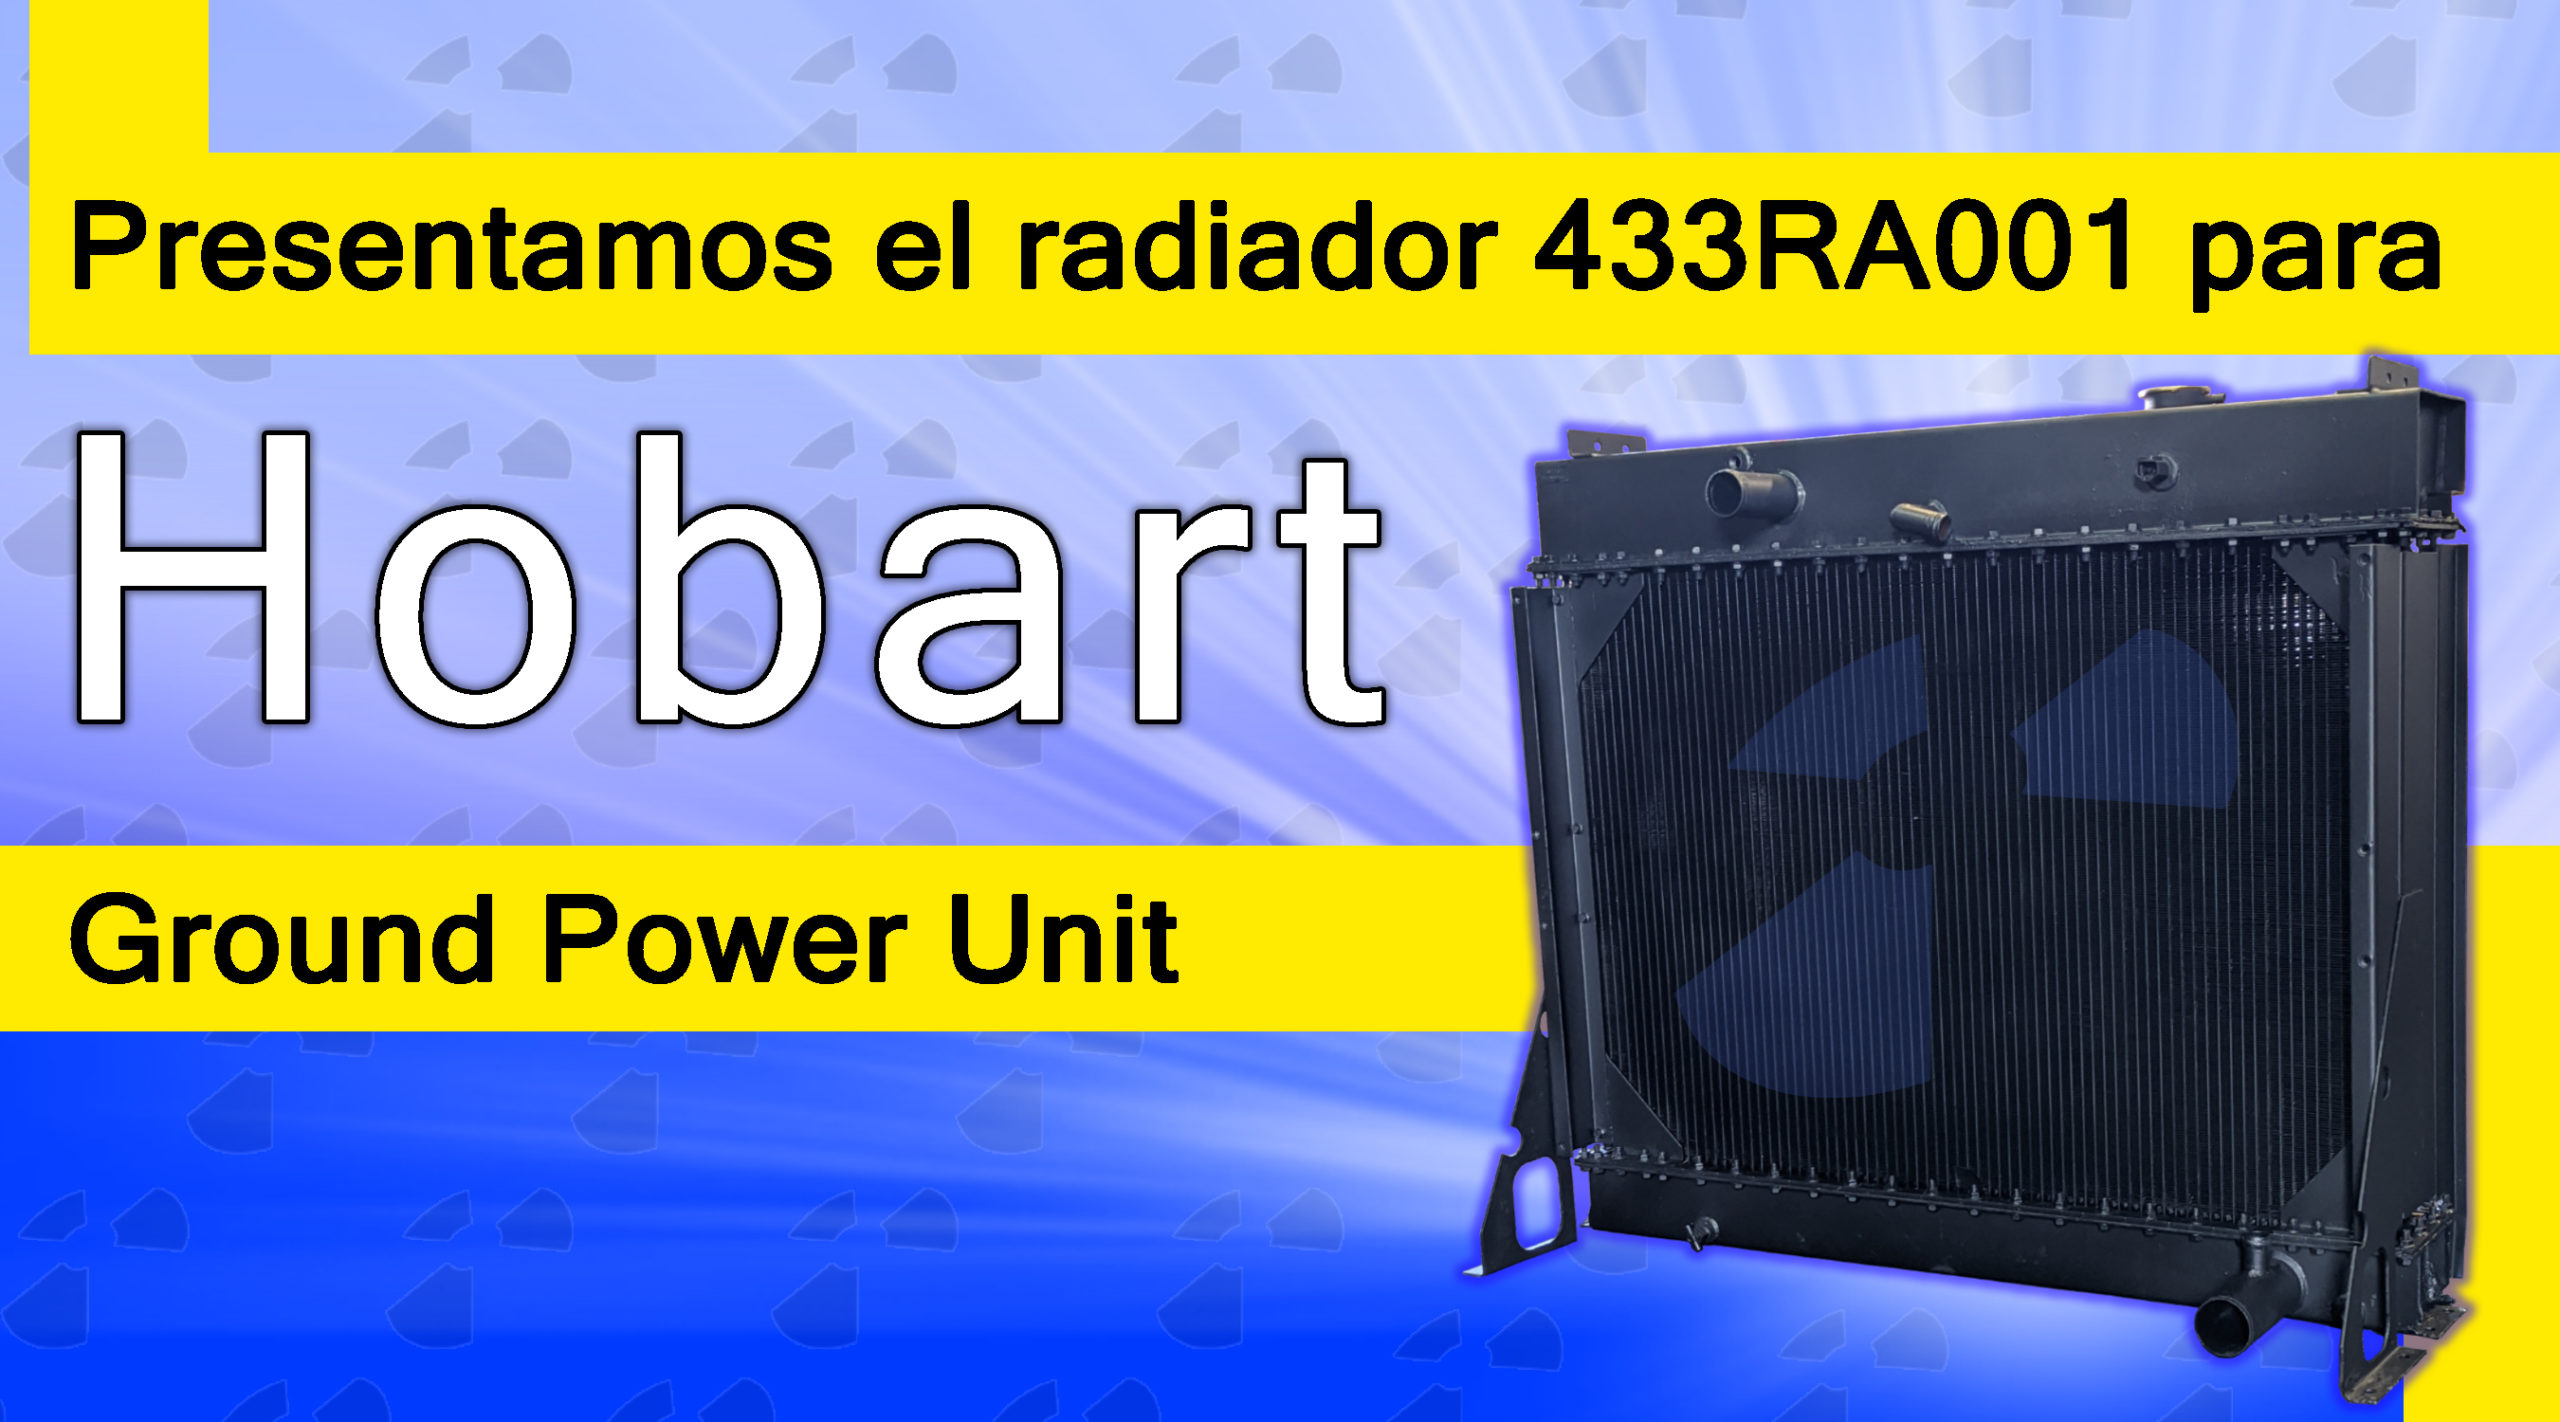 Presentamos el radiador 433RA001 para Hobart Ground Power Unit.